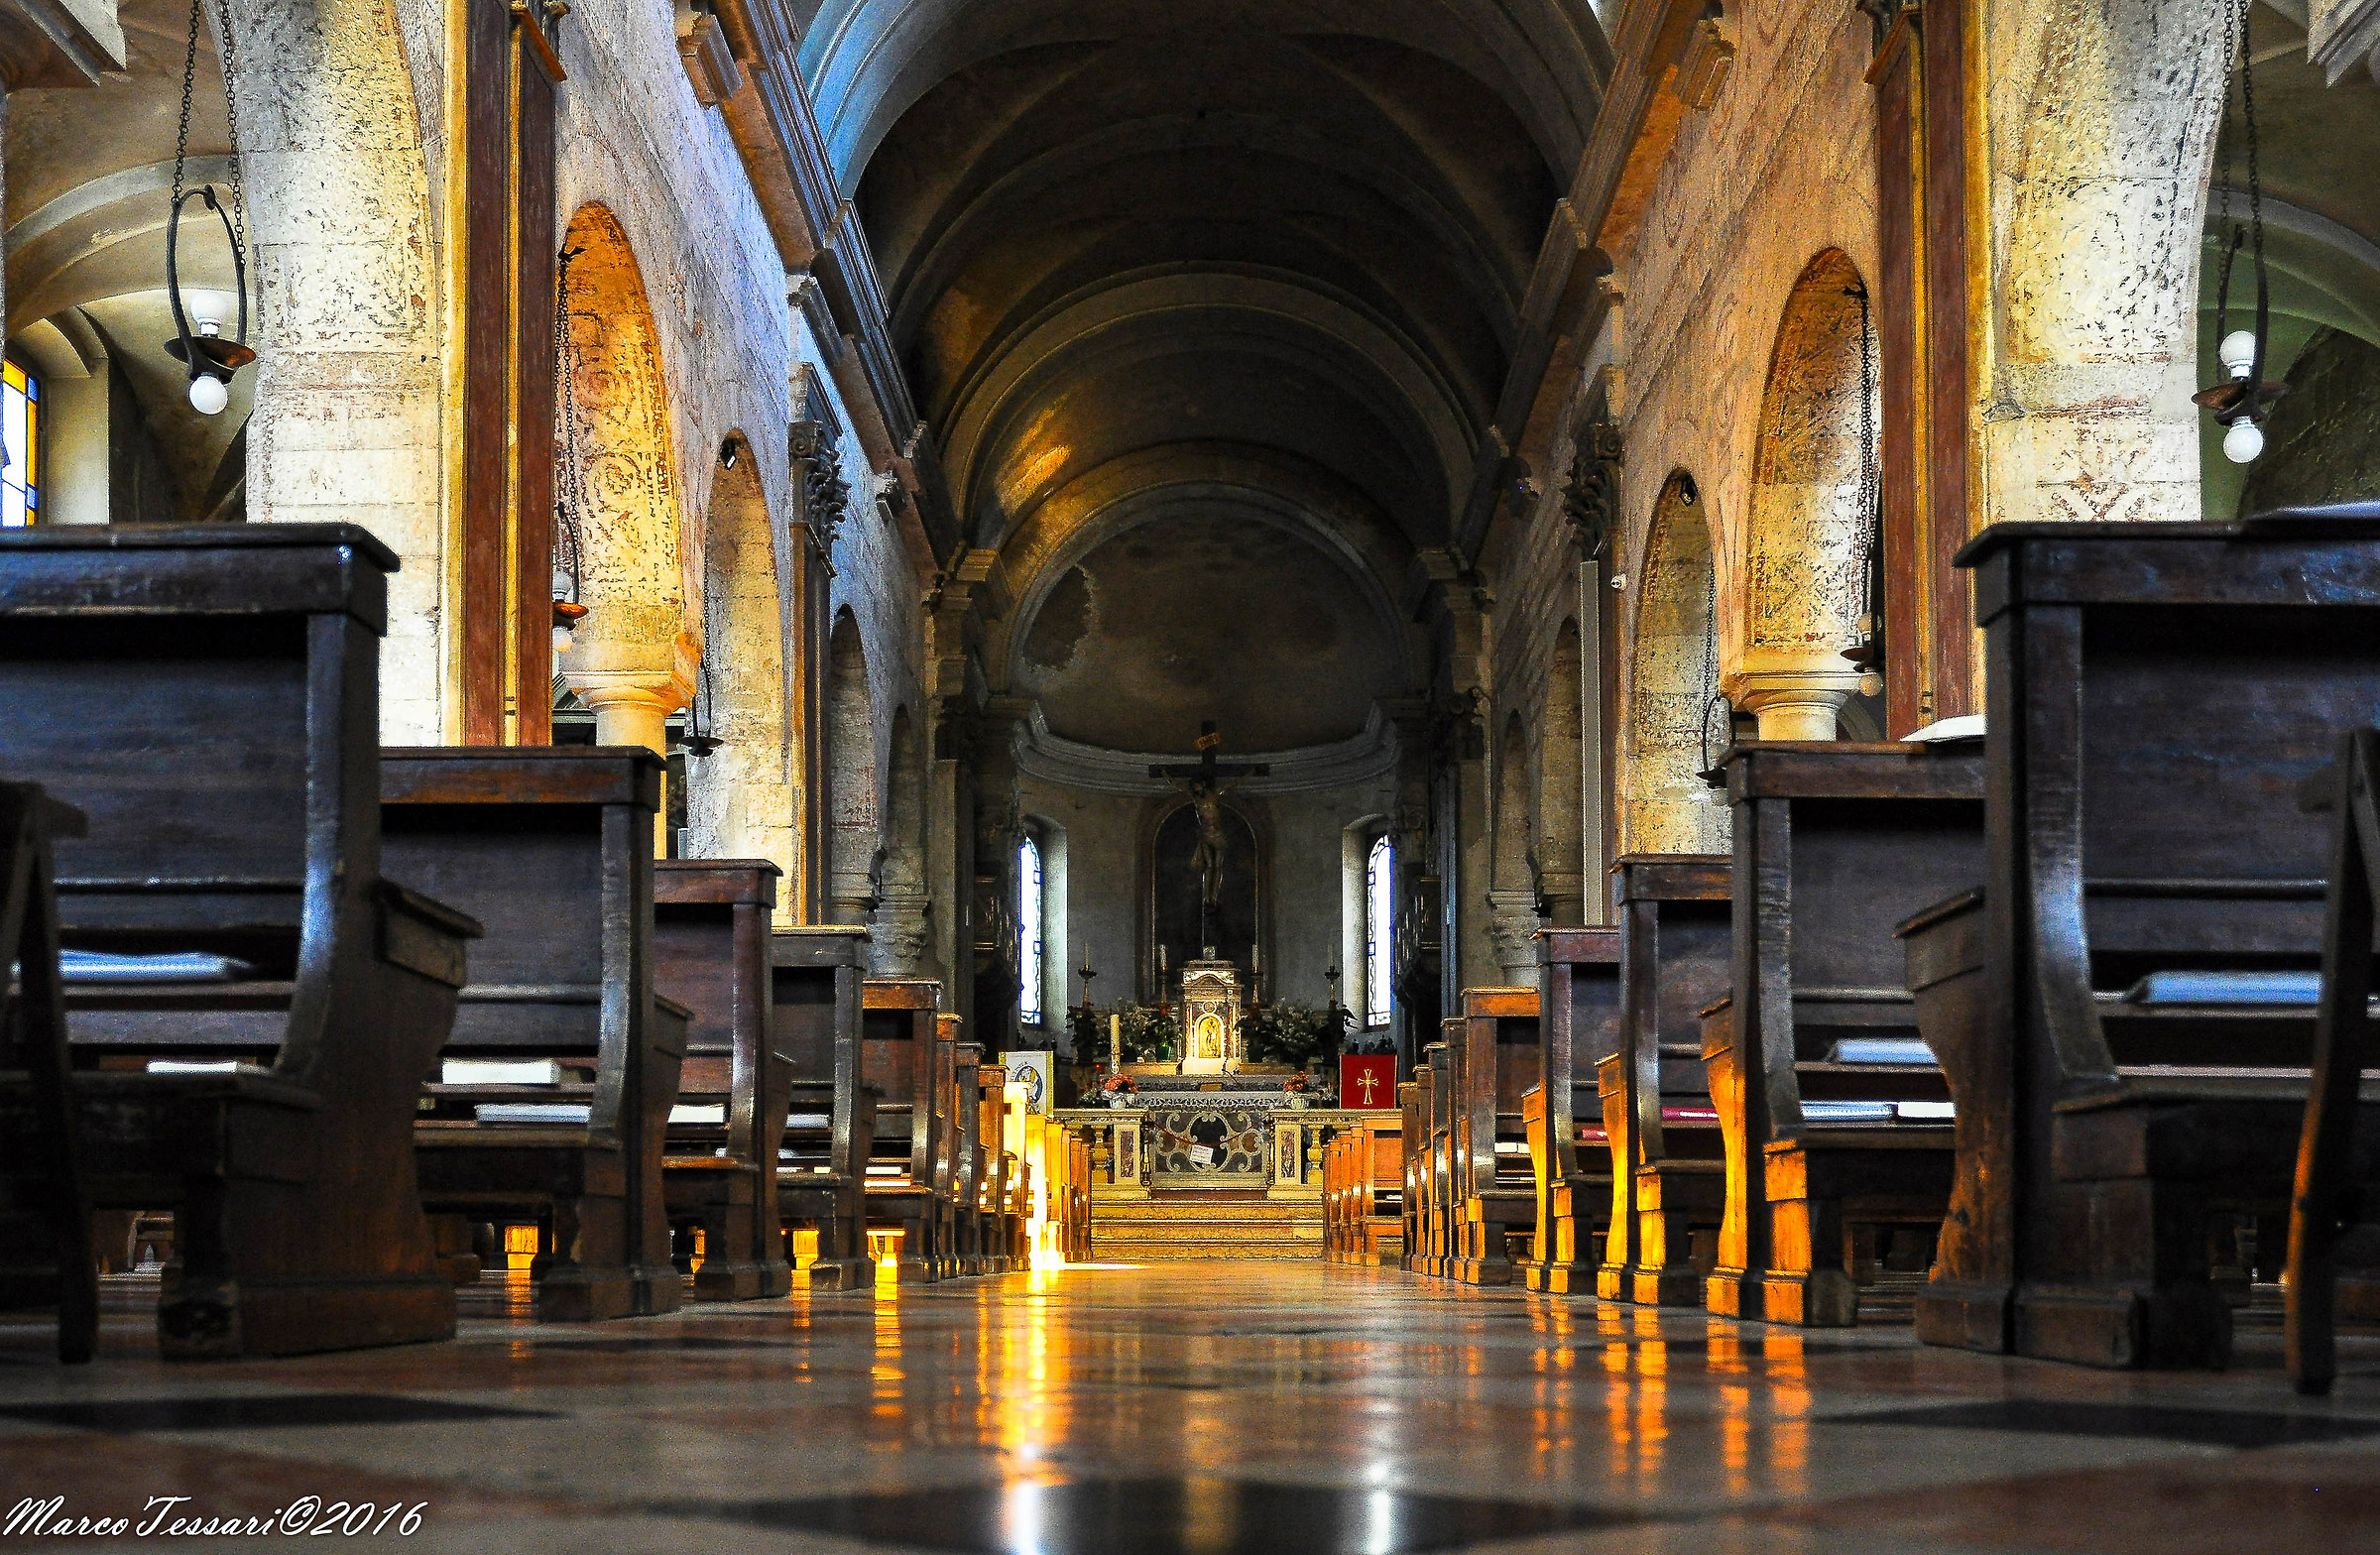 The St. Florian's church in Valpolicella - Verona...